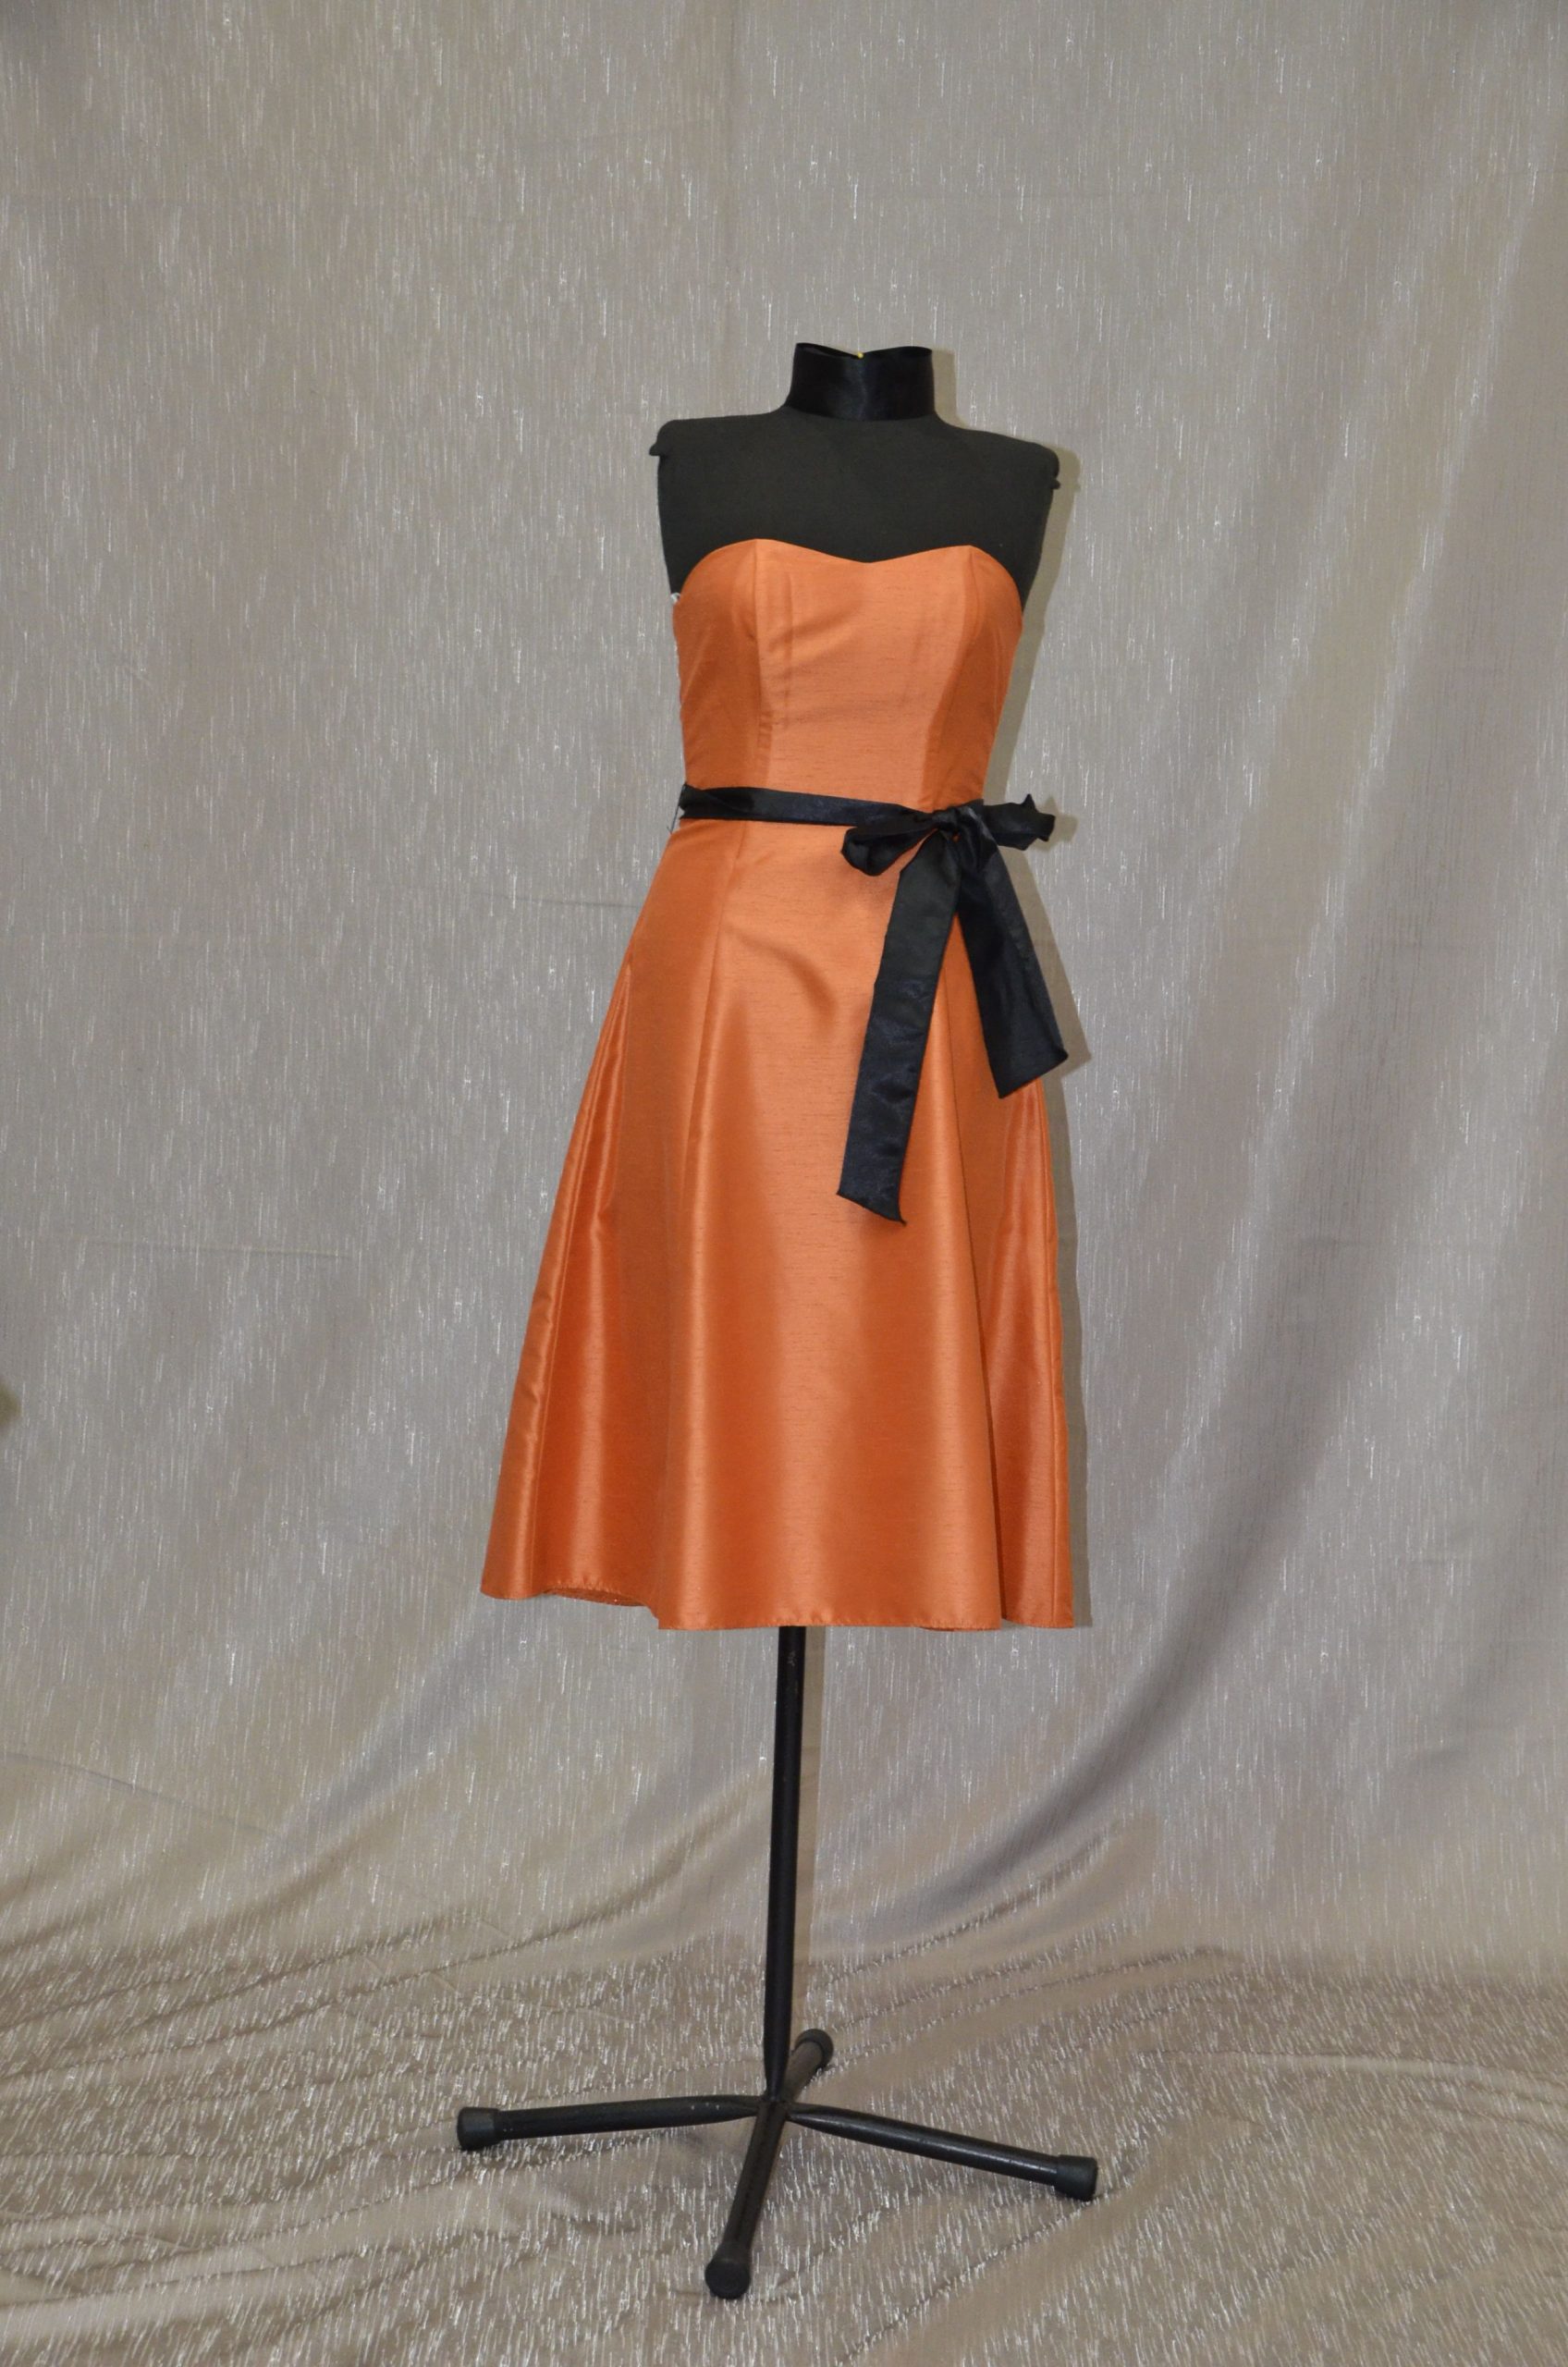 Orange Cocktail dress, size 12